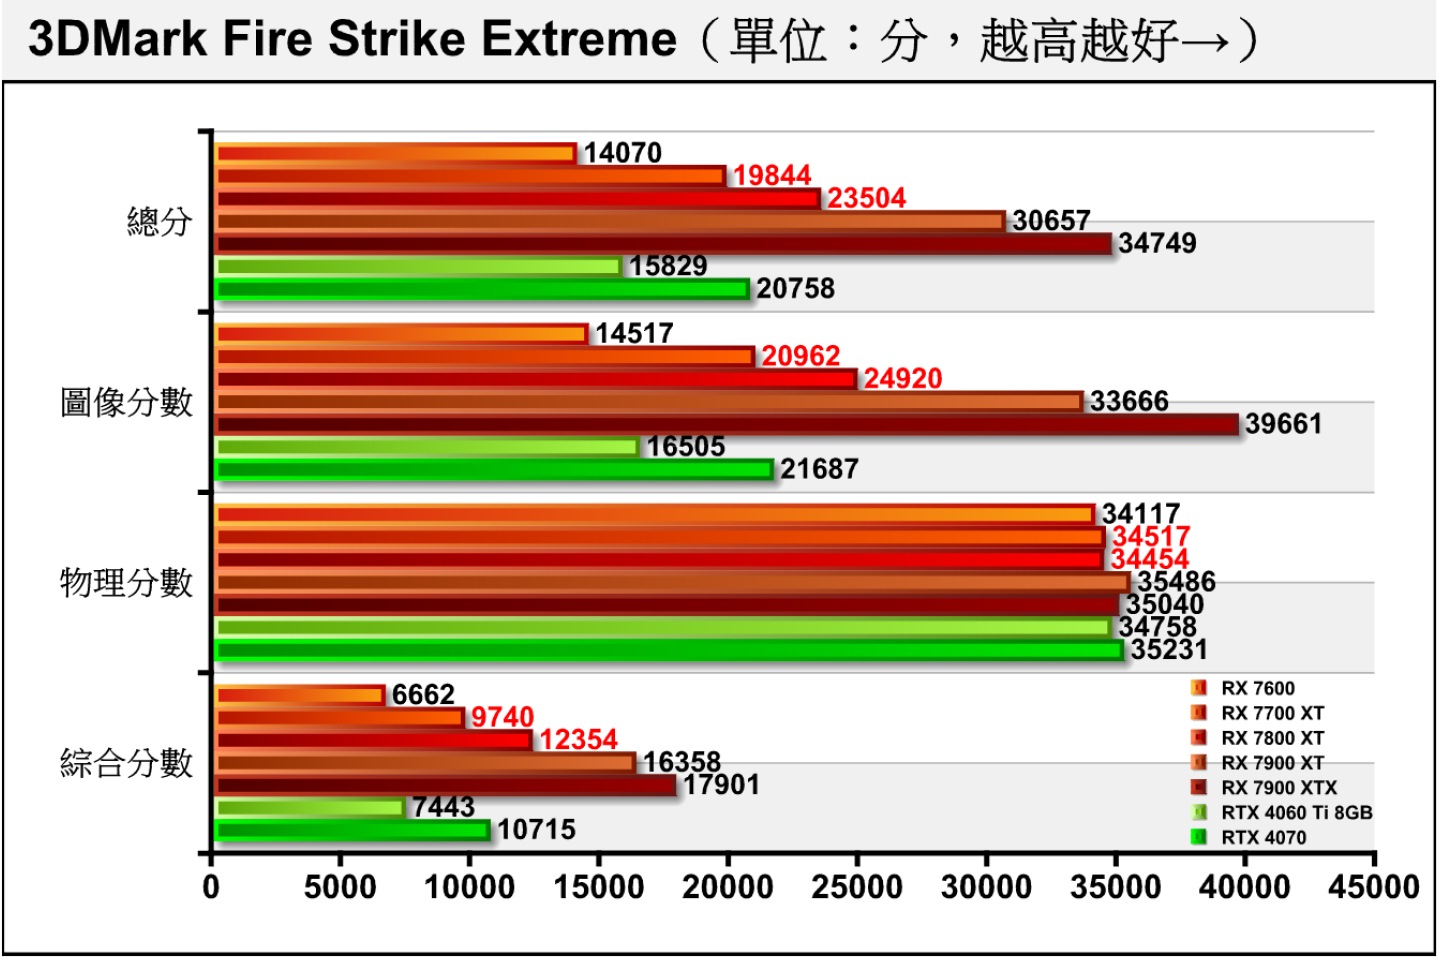 Fire Strike Extreme將解析度提升至2K（2560 x 1440），RX 7800 XT、RX 7700 XT在圖像分數分別能領先RTX 4070、RTX 4060 Ti 8GB達14.91%、27.01%。